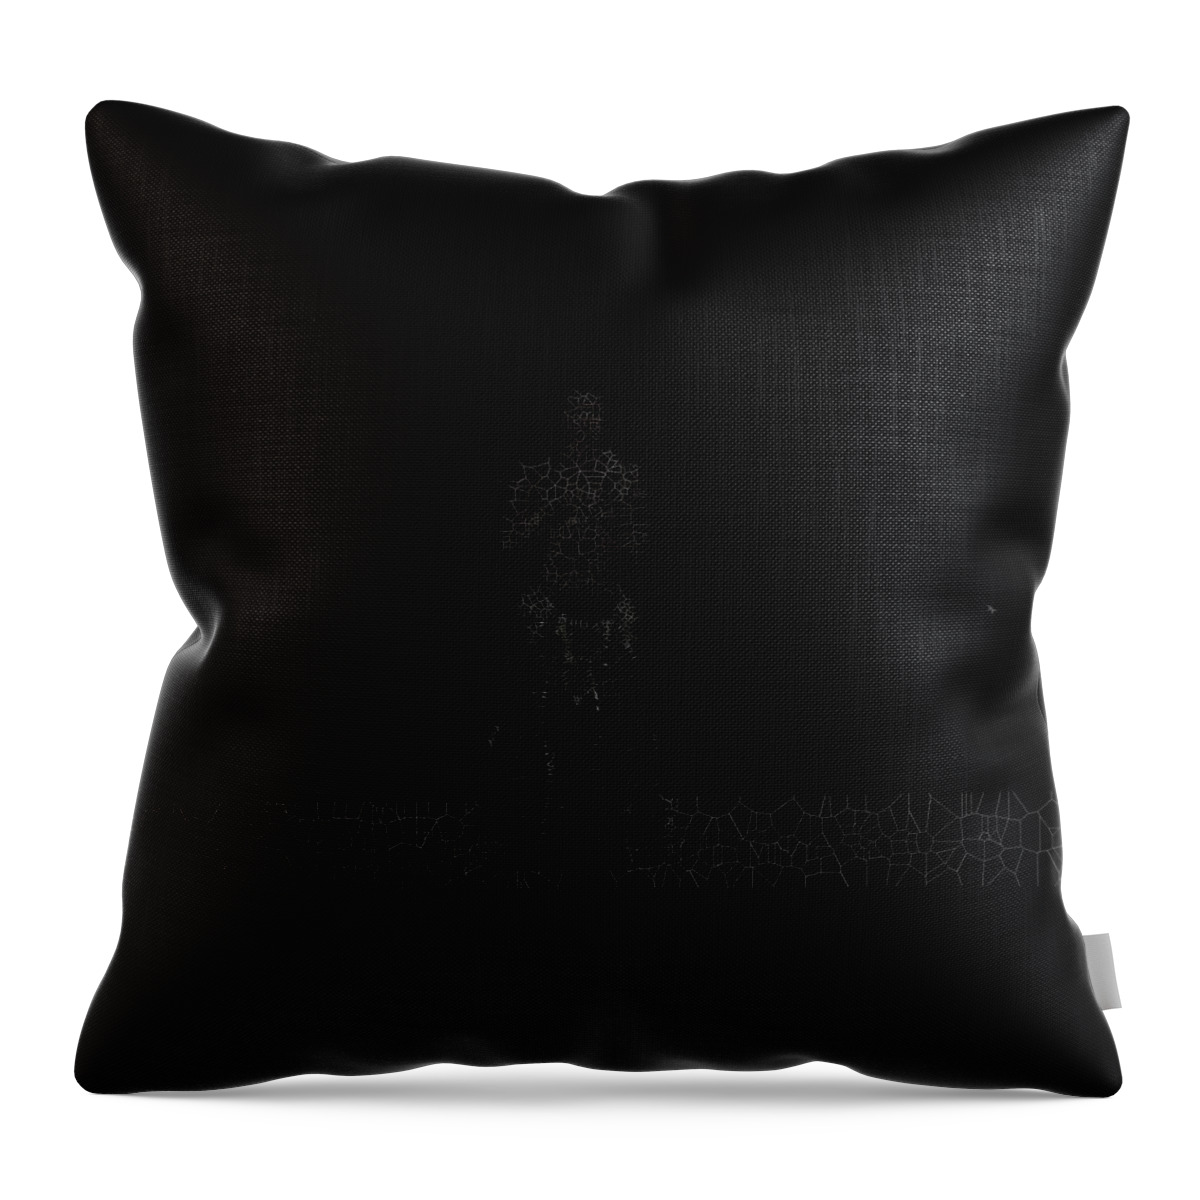 Vorotrans Throw Pillow featuring the digital art Faint by Stephane Poirier